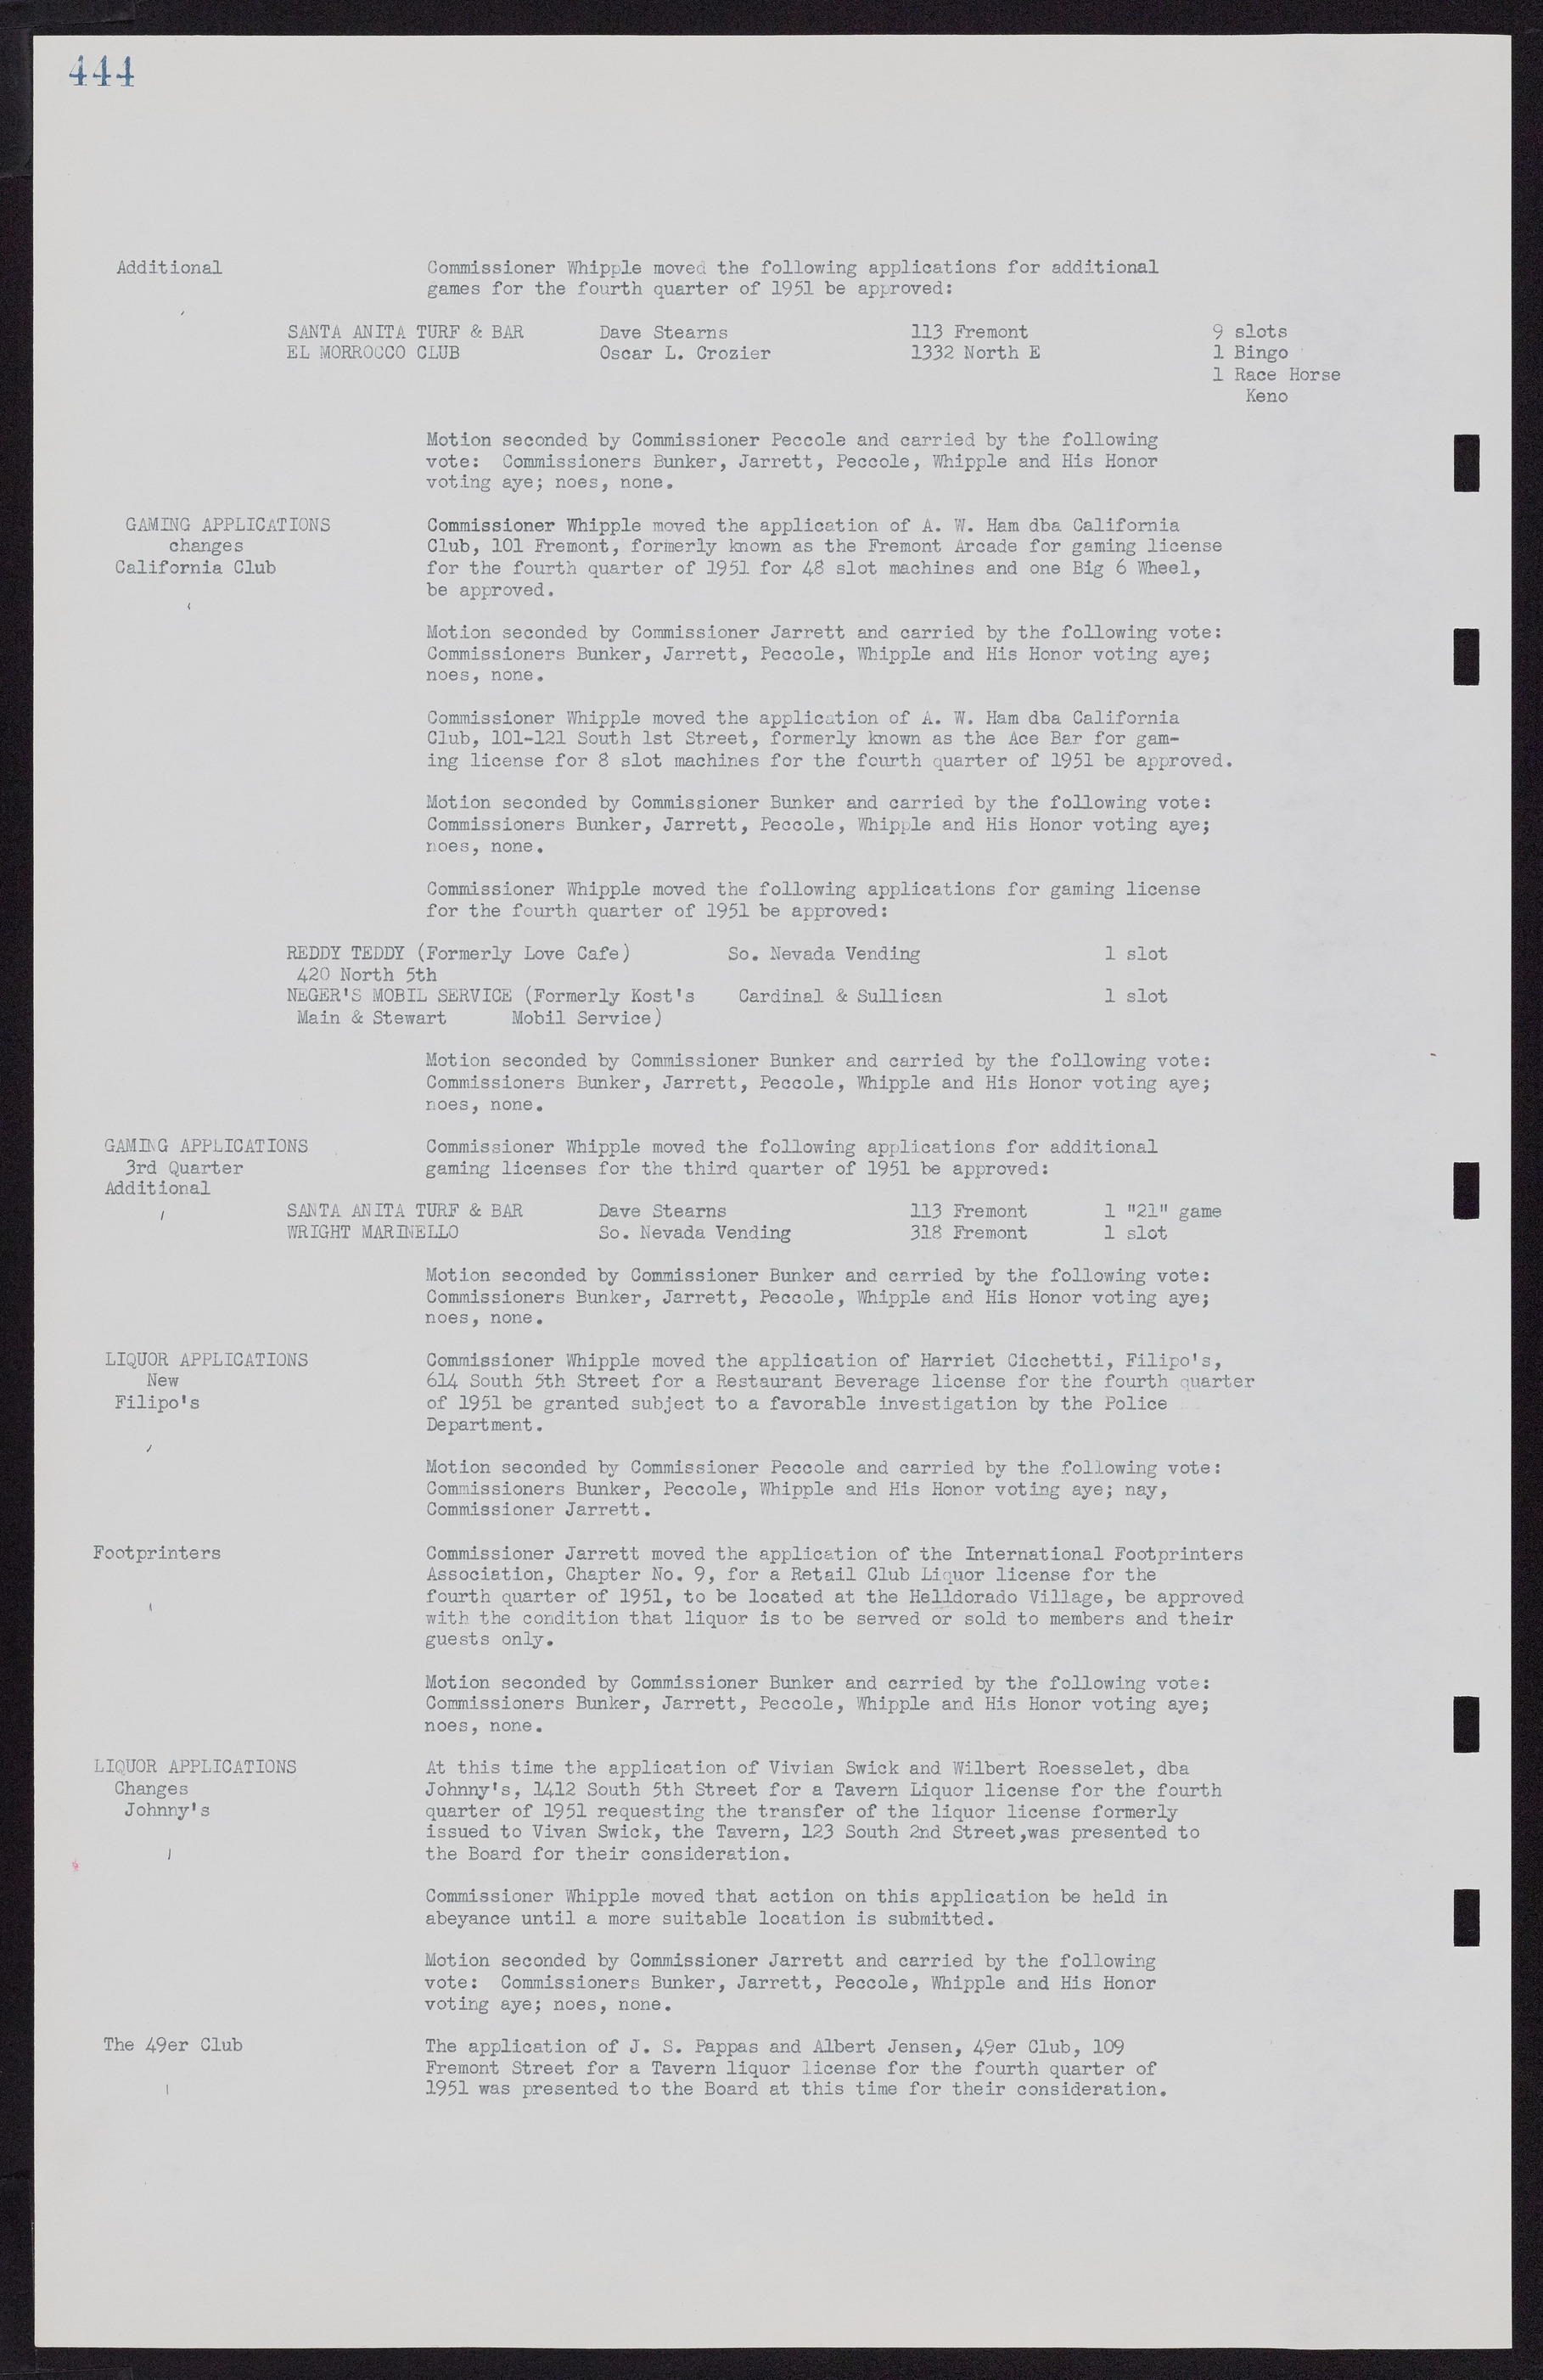 Las Vegas City Commission Minutes, November 7, 1949 to May 21, 1952, lvc000007-460